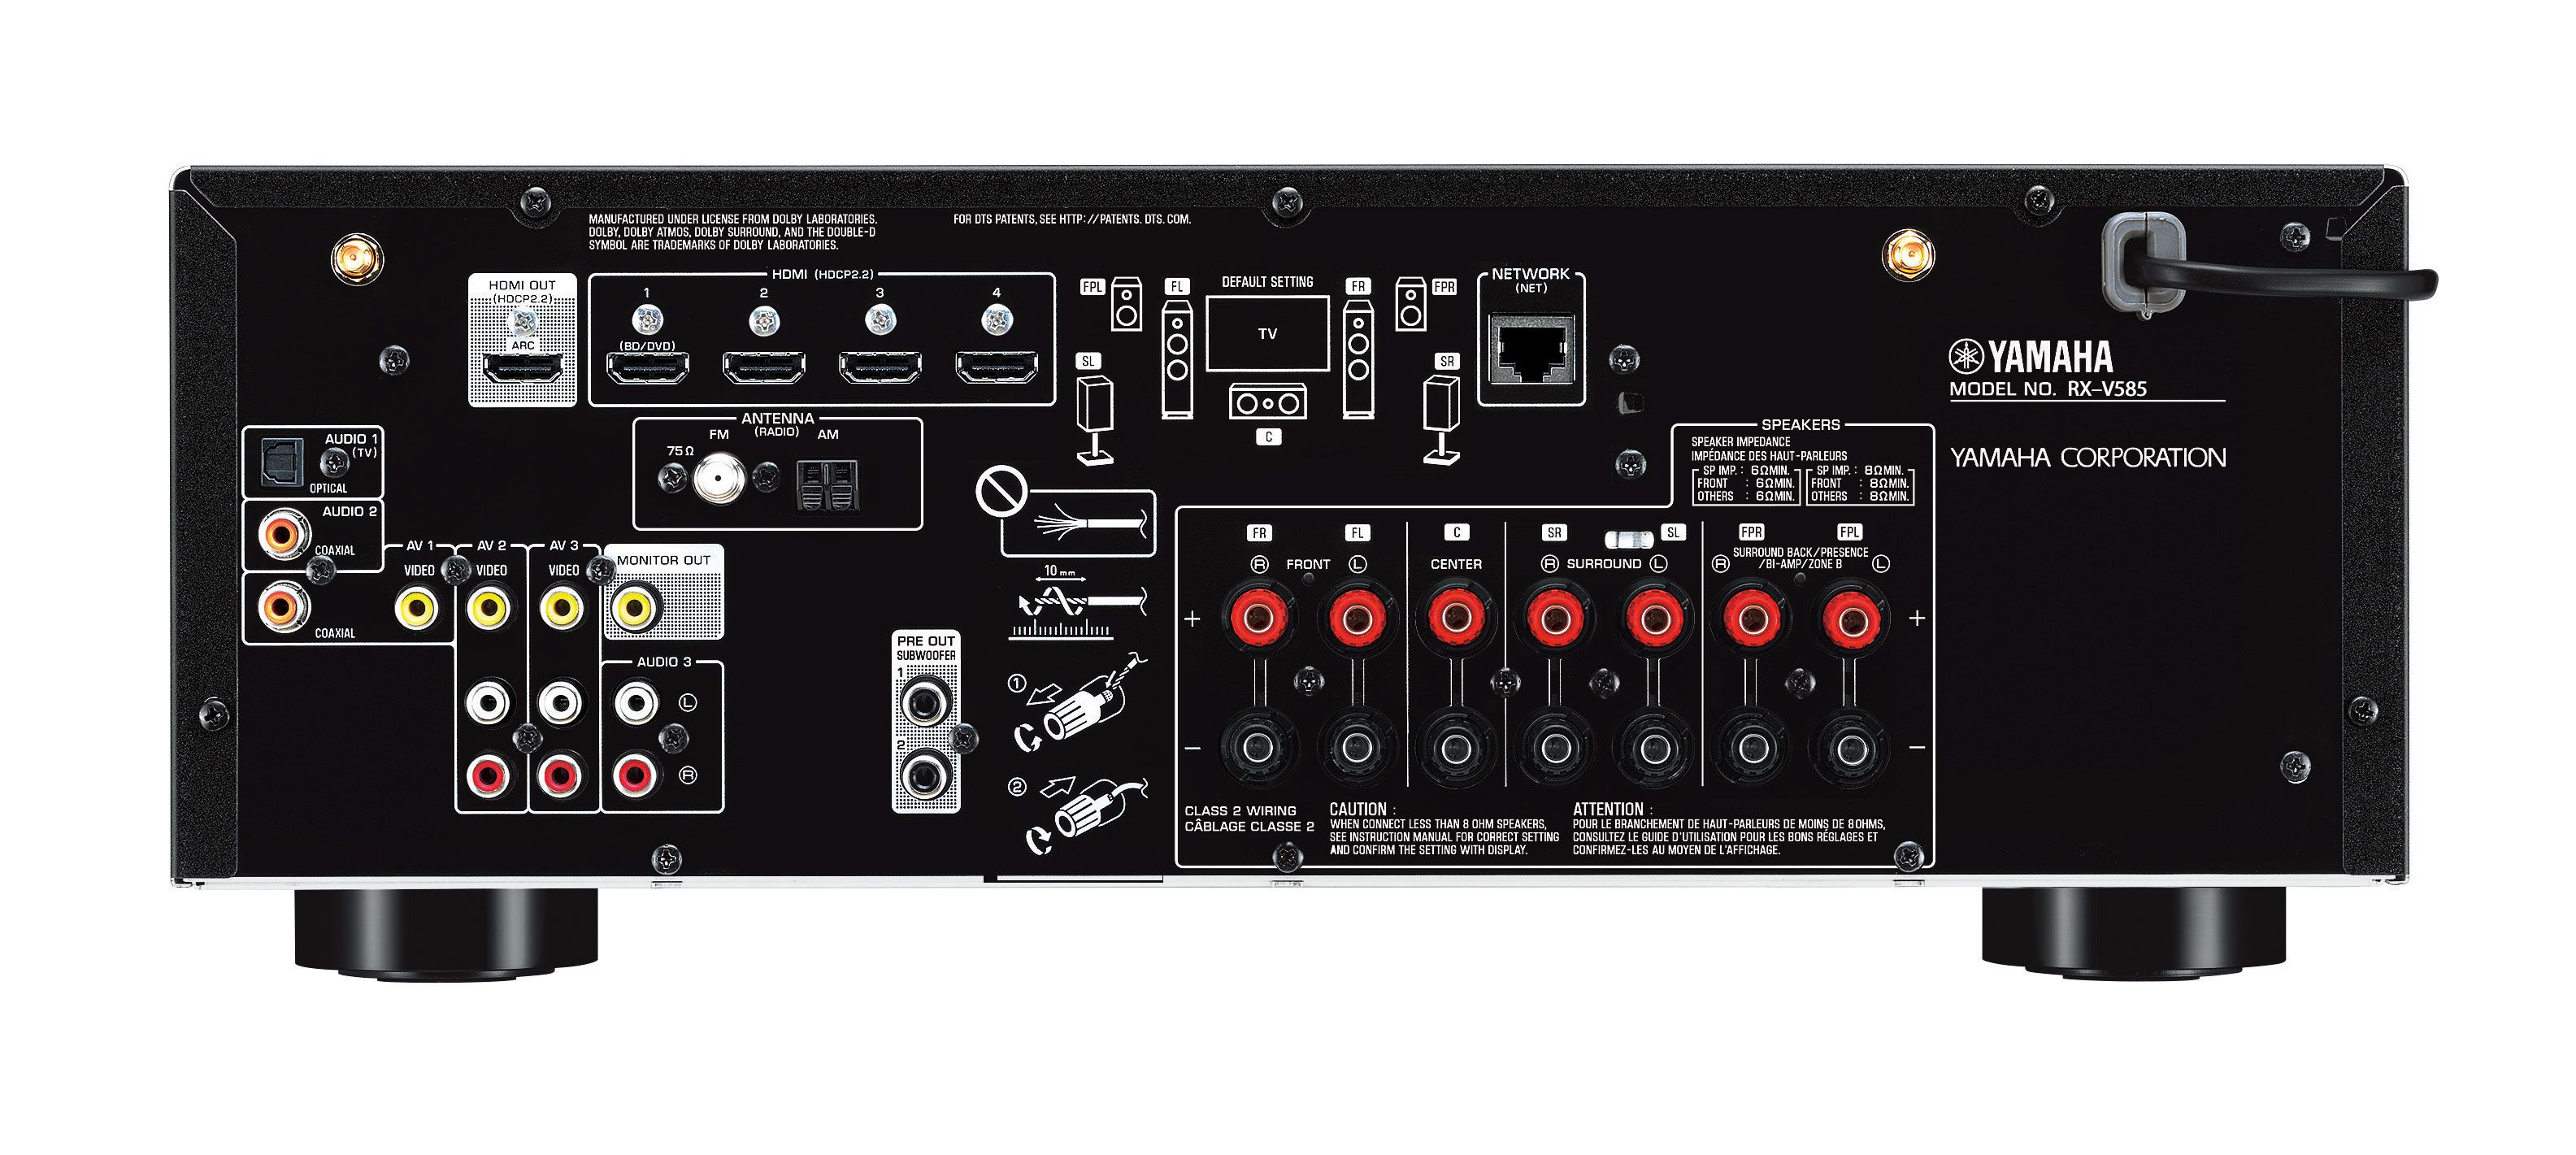 klauw Huiskamer Ingang RX-V585 - Overview - AV Receivers - Audio & Visual - Products - Yamaha USA